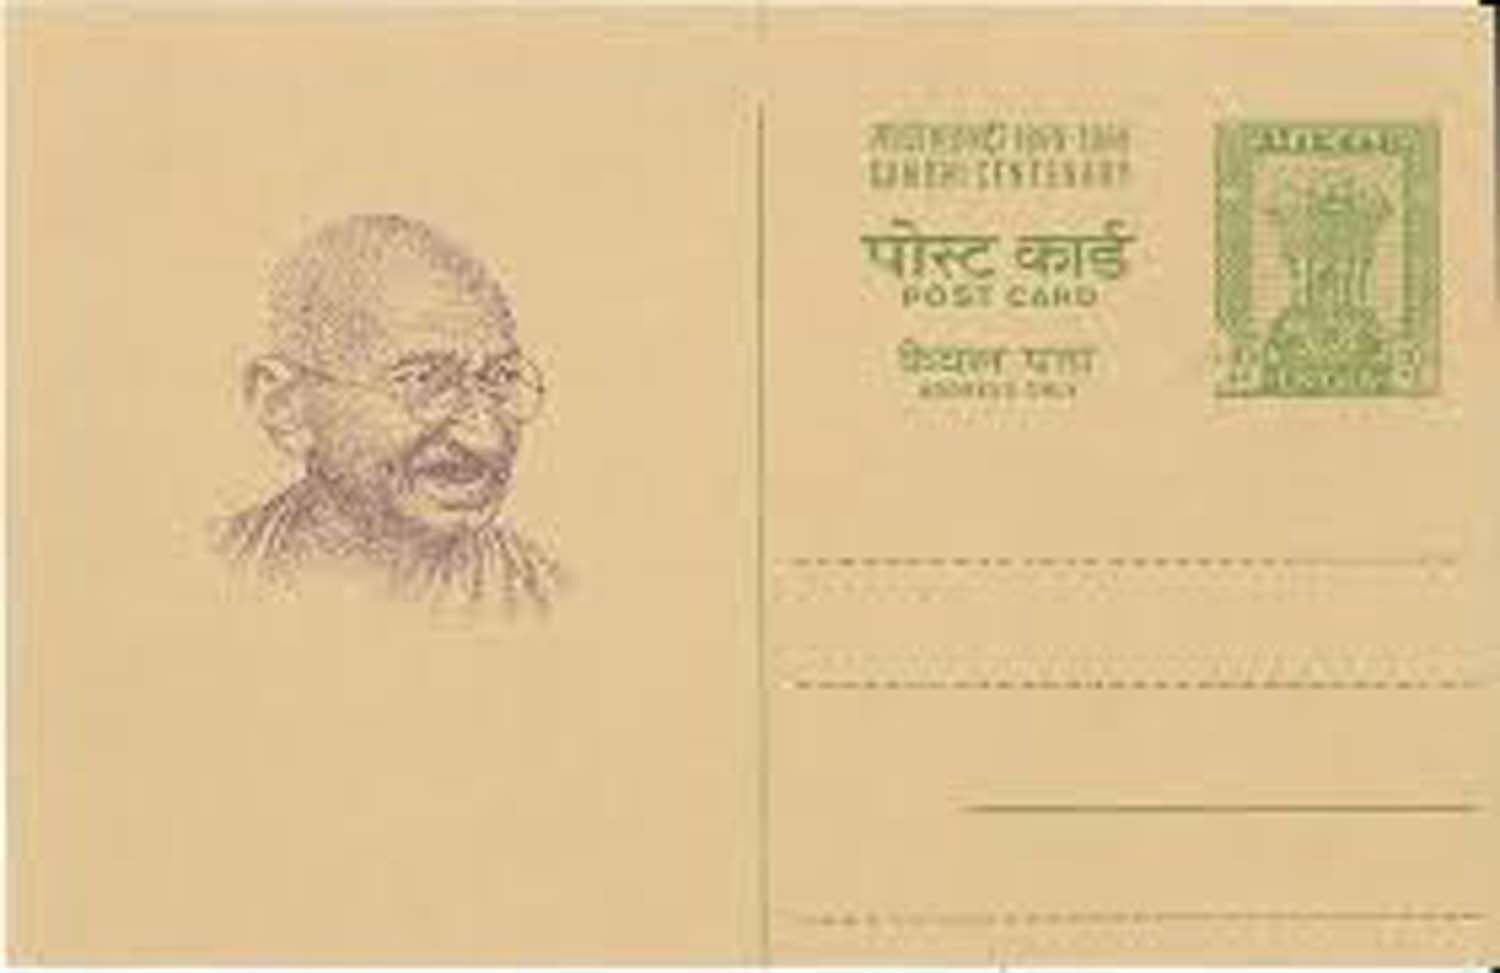 Postcard News: 3 lakh twenty thousand post cards sold, 153 years old postcard